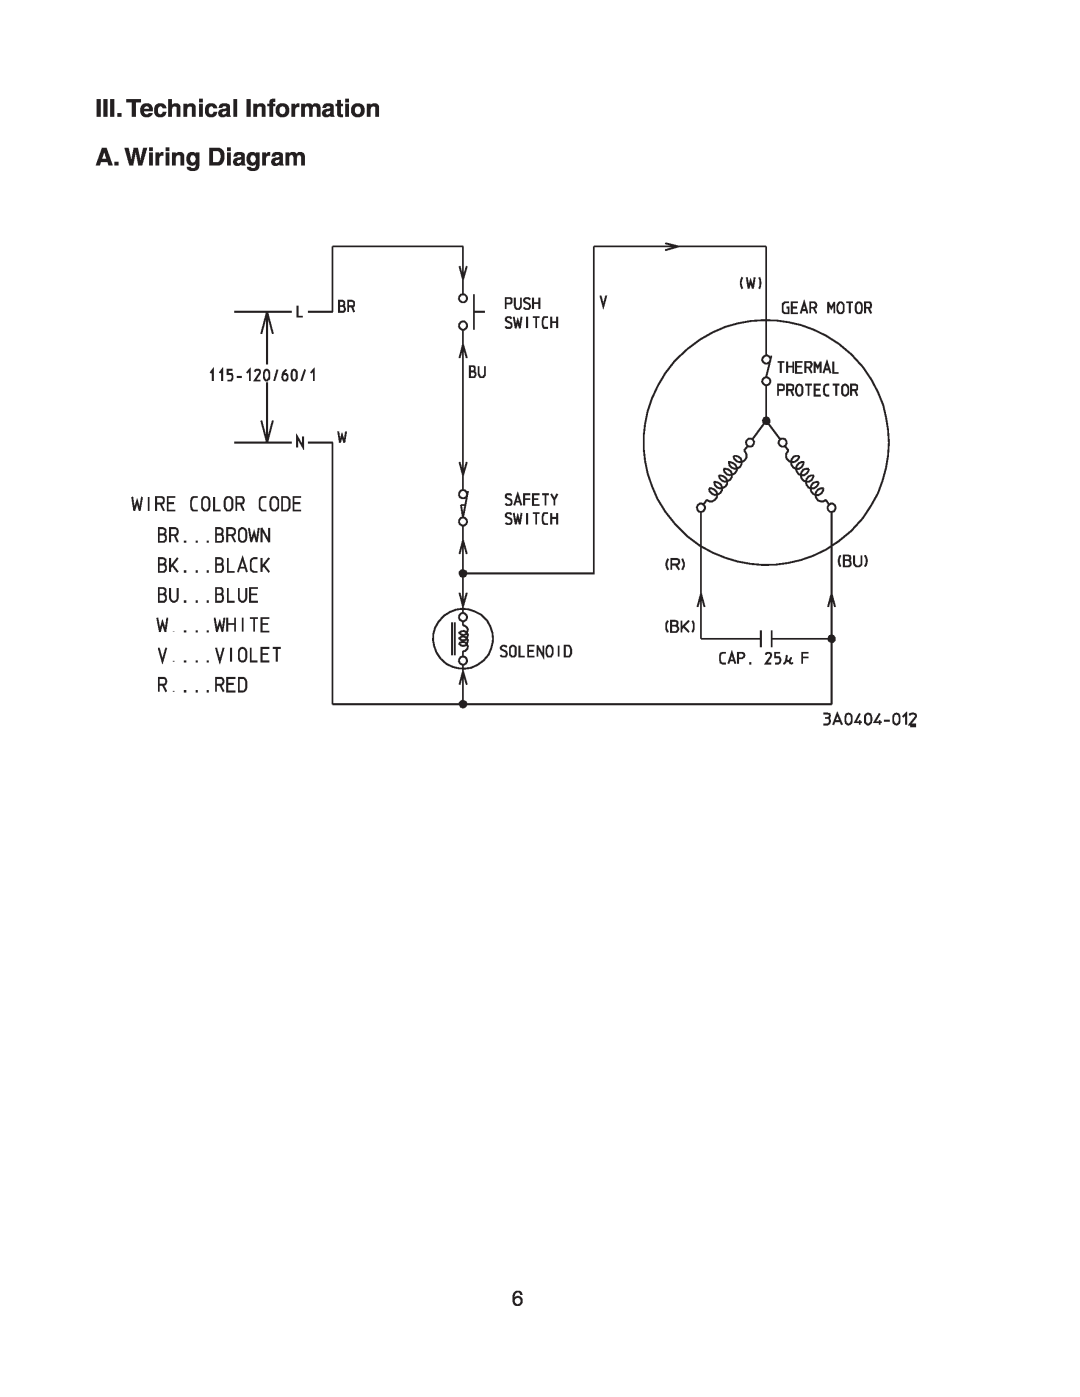 Hoshizaki DB-130H service manual III.Technical Information A. Wiring Diagram 